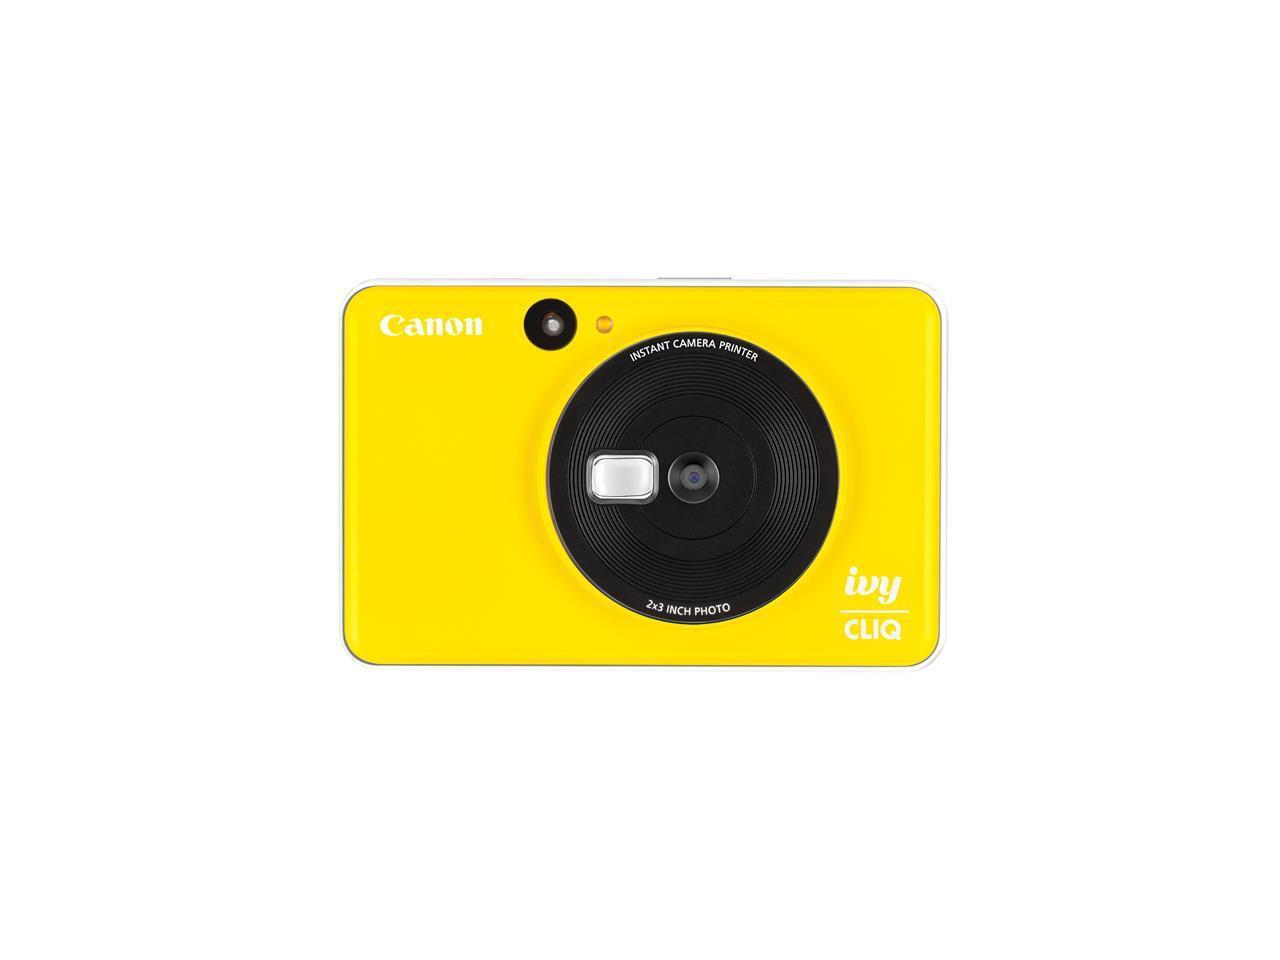 Canon Ivy Cliq Instant Digital Camera - Bumblebee Yellow